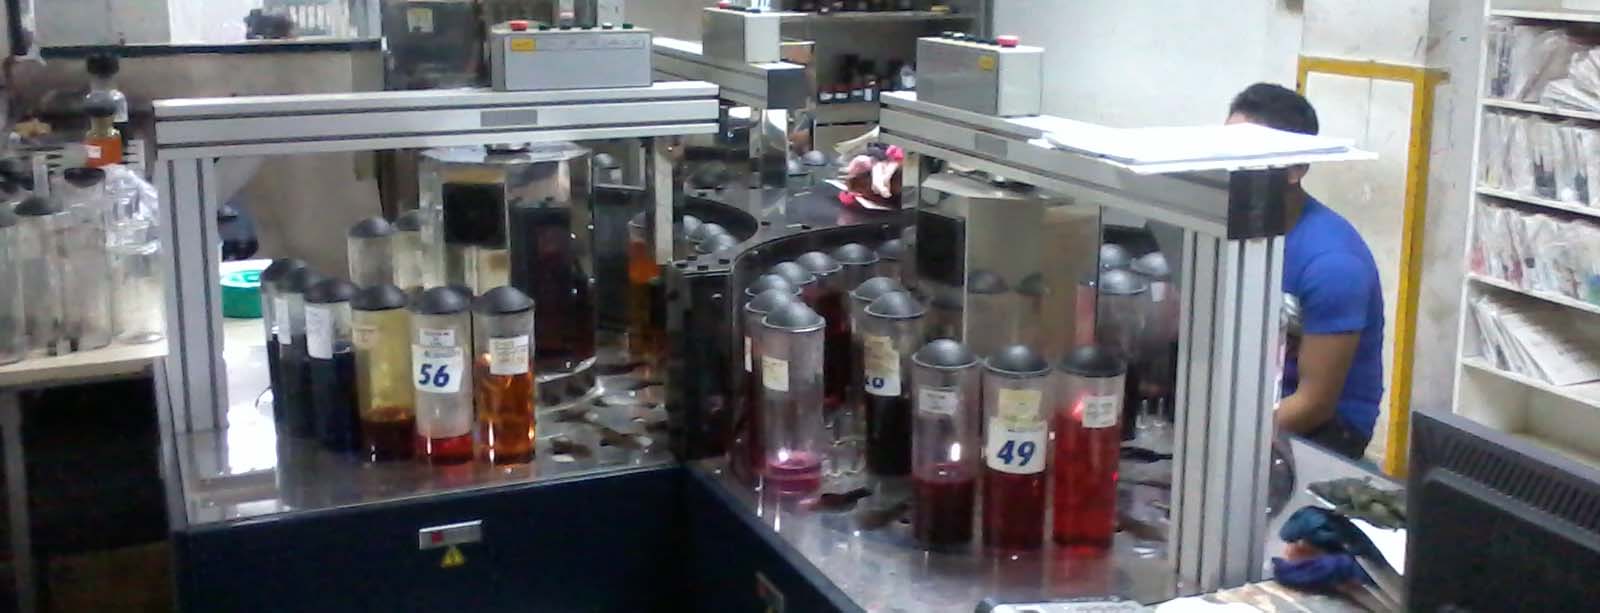 Laboratories Equipment